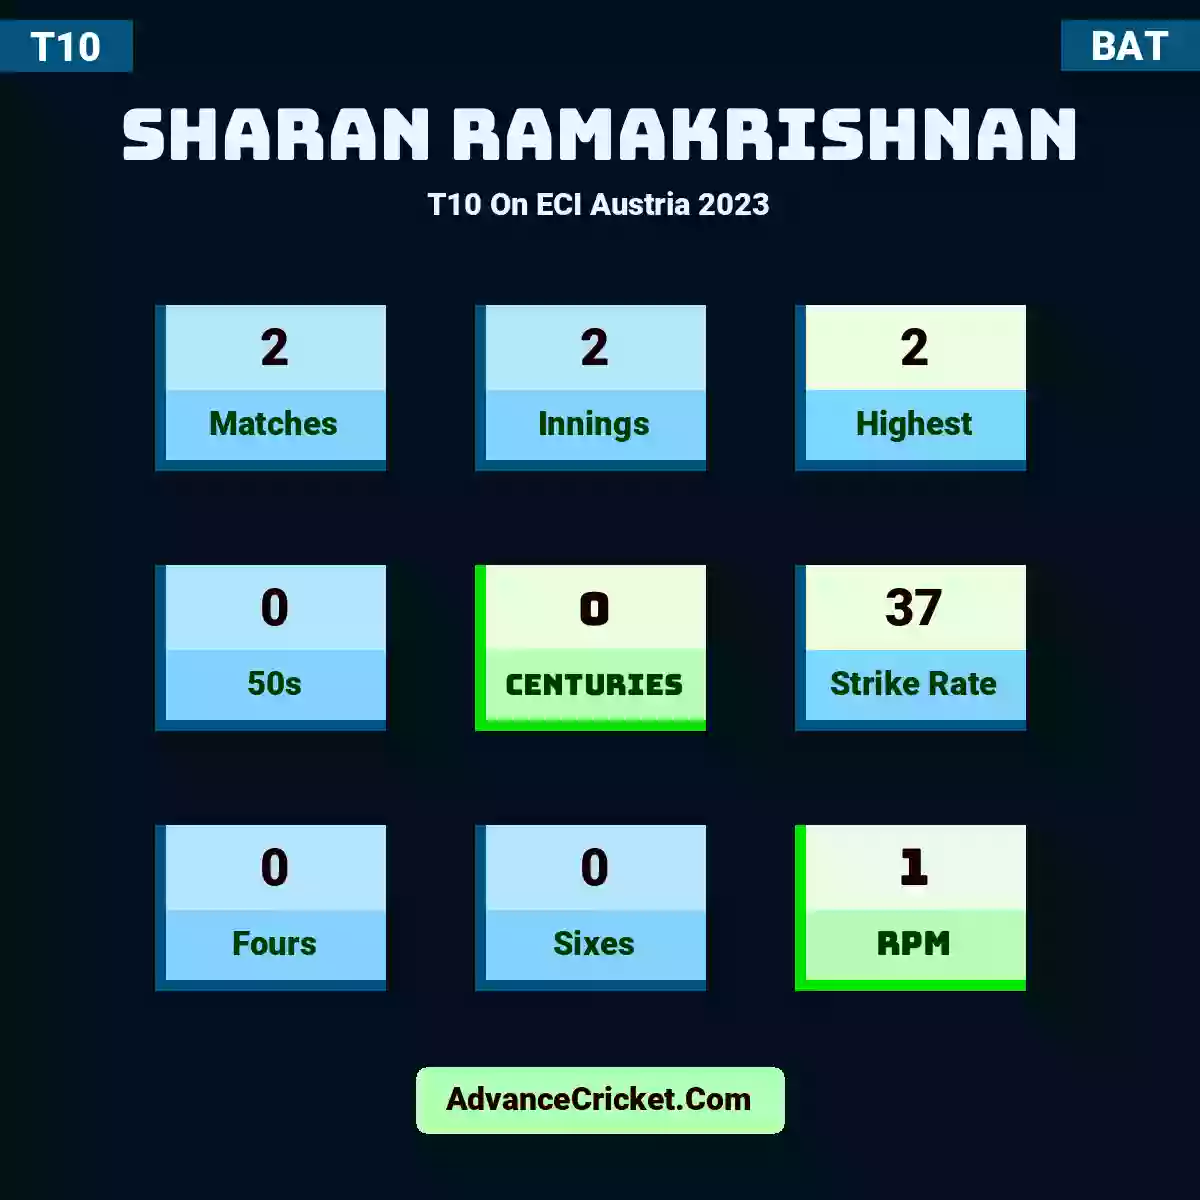 Sharan Ramakrishnan T10  On ECI Austria 2023, Sharan Ramakrishnan played 2 matches, scored 2 runs as highest, 0 half-centuries, and 0 centuries, with a strike rate of 37. S.Ramakrishnan hit 0 fours and 0 sixes, with an RPM of 1.